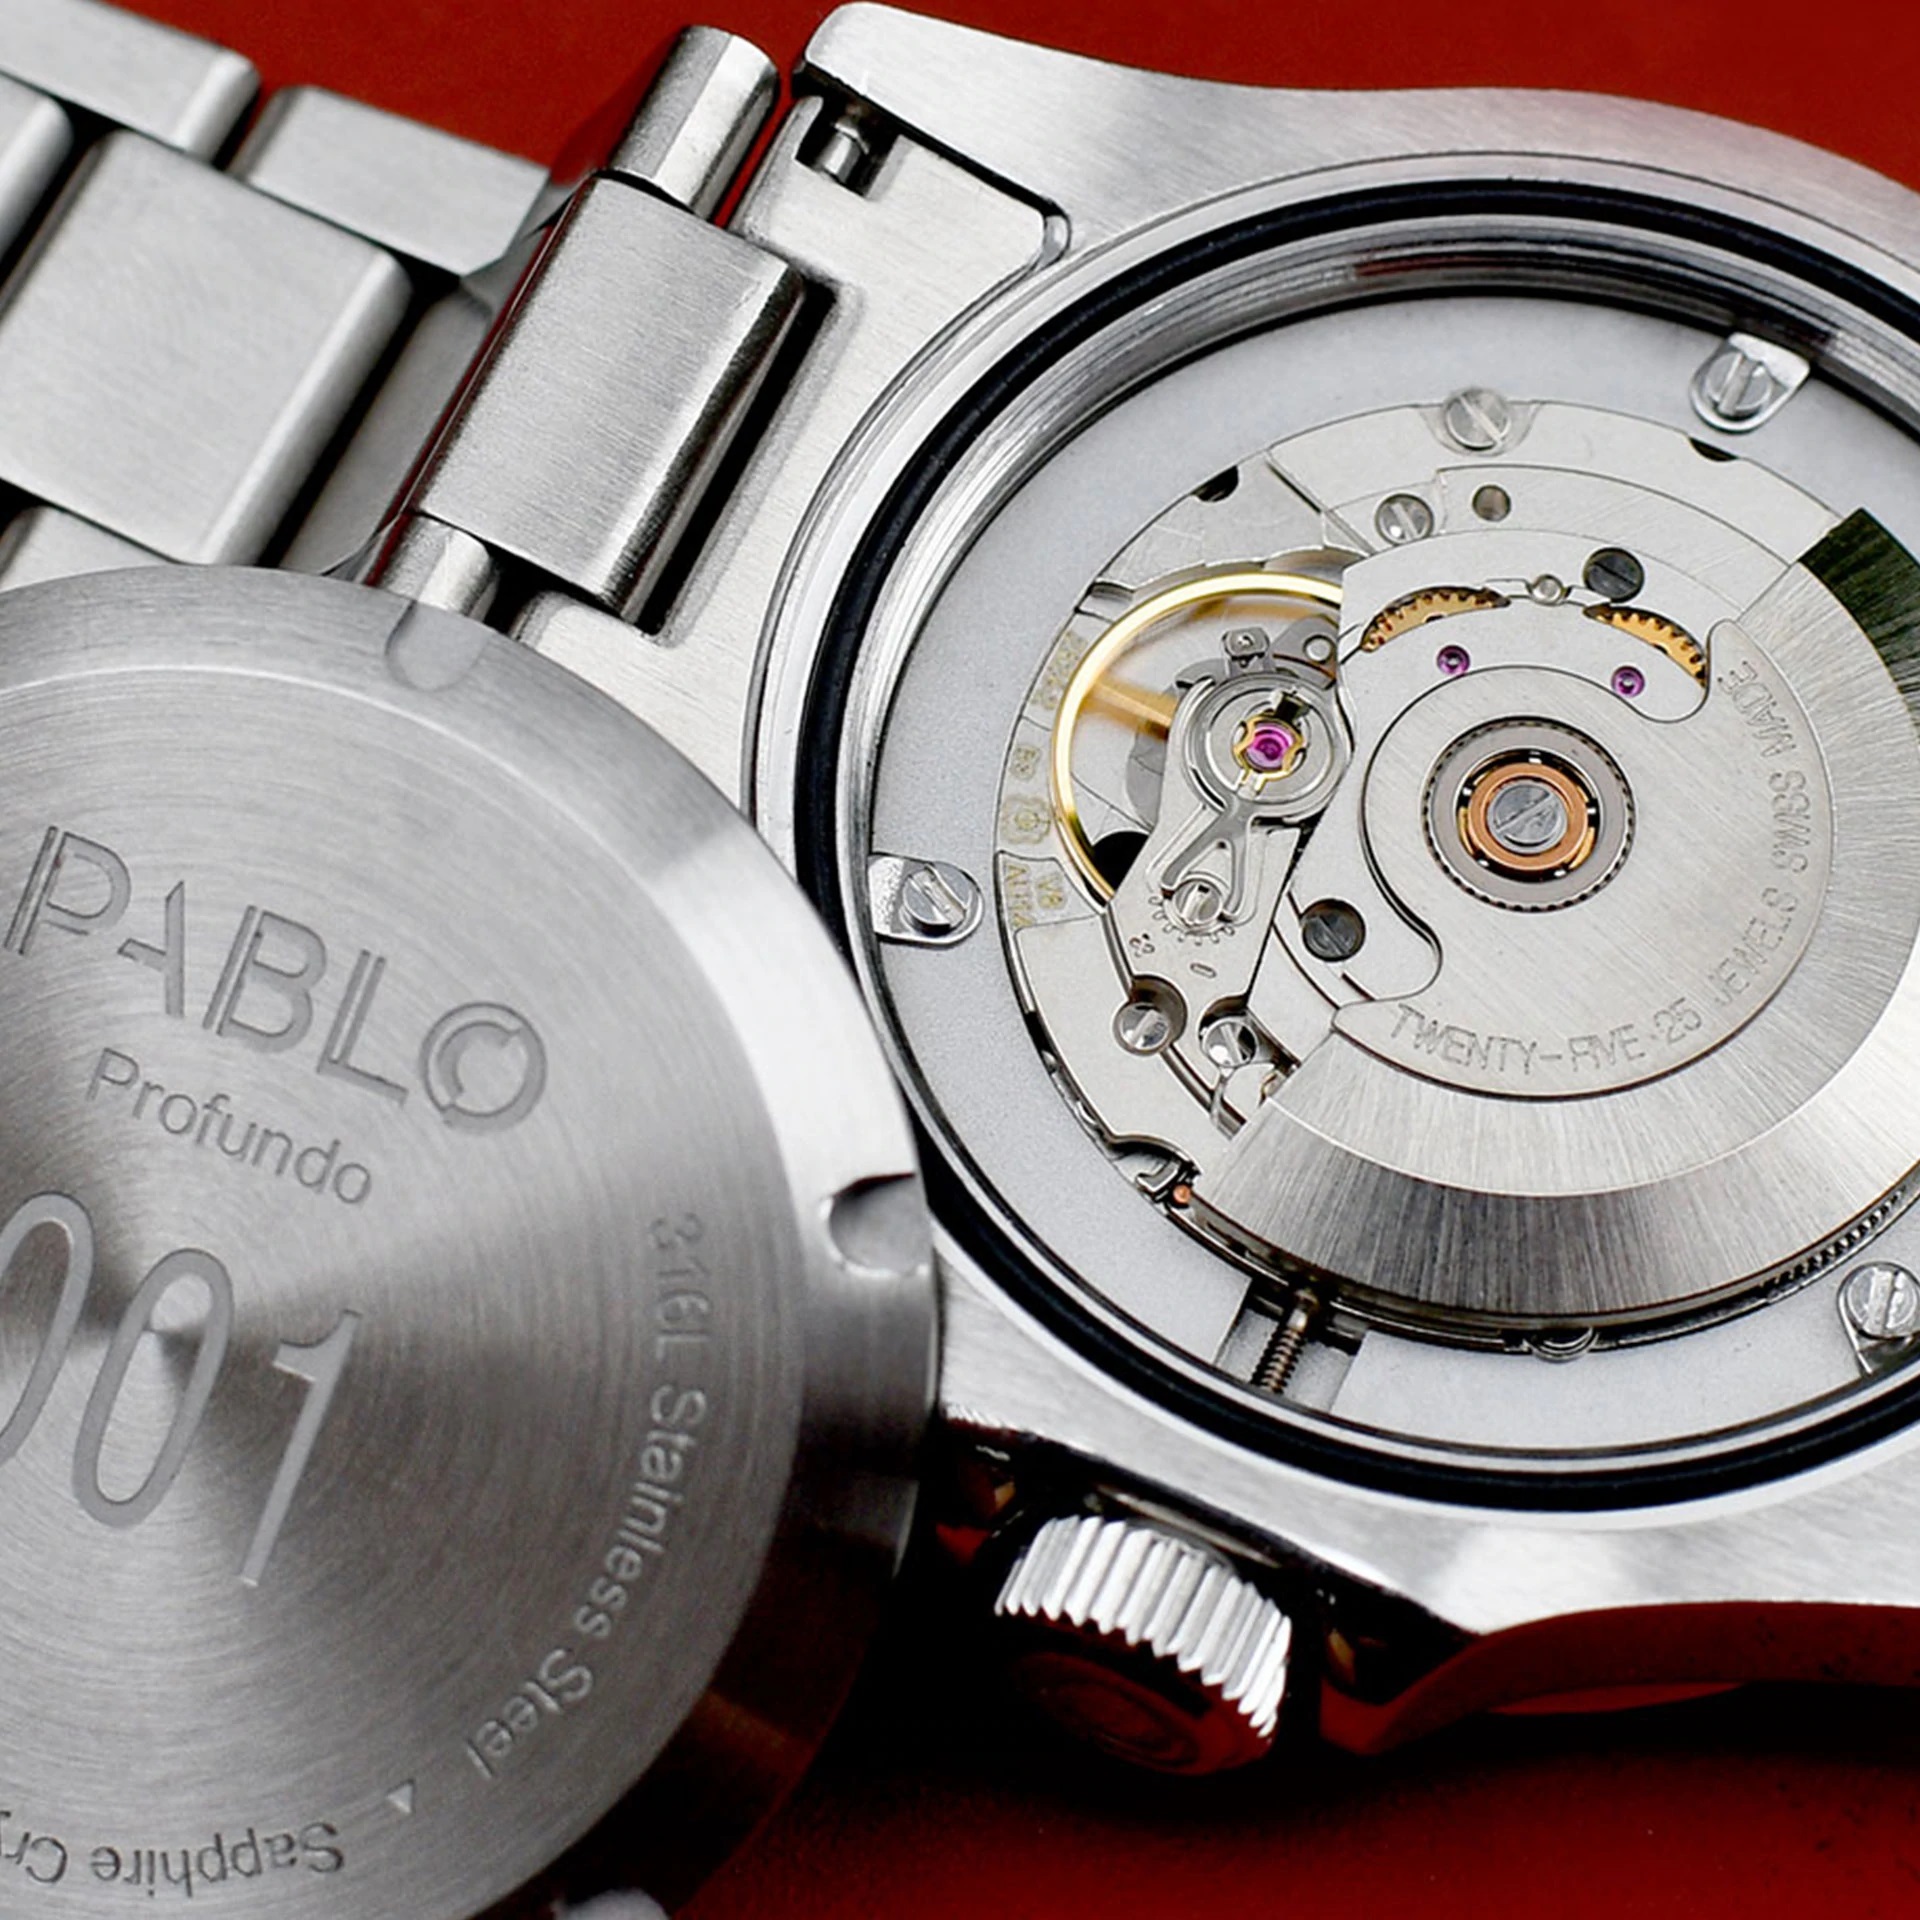 Pablo Profundo Automatic Men's Watch Black Dial / Black Bezel VB-11 Limited 200pcs